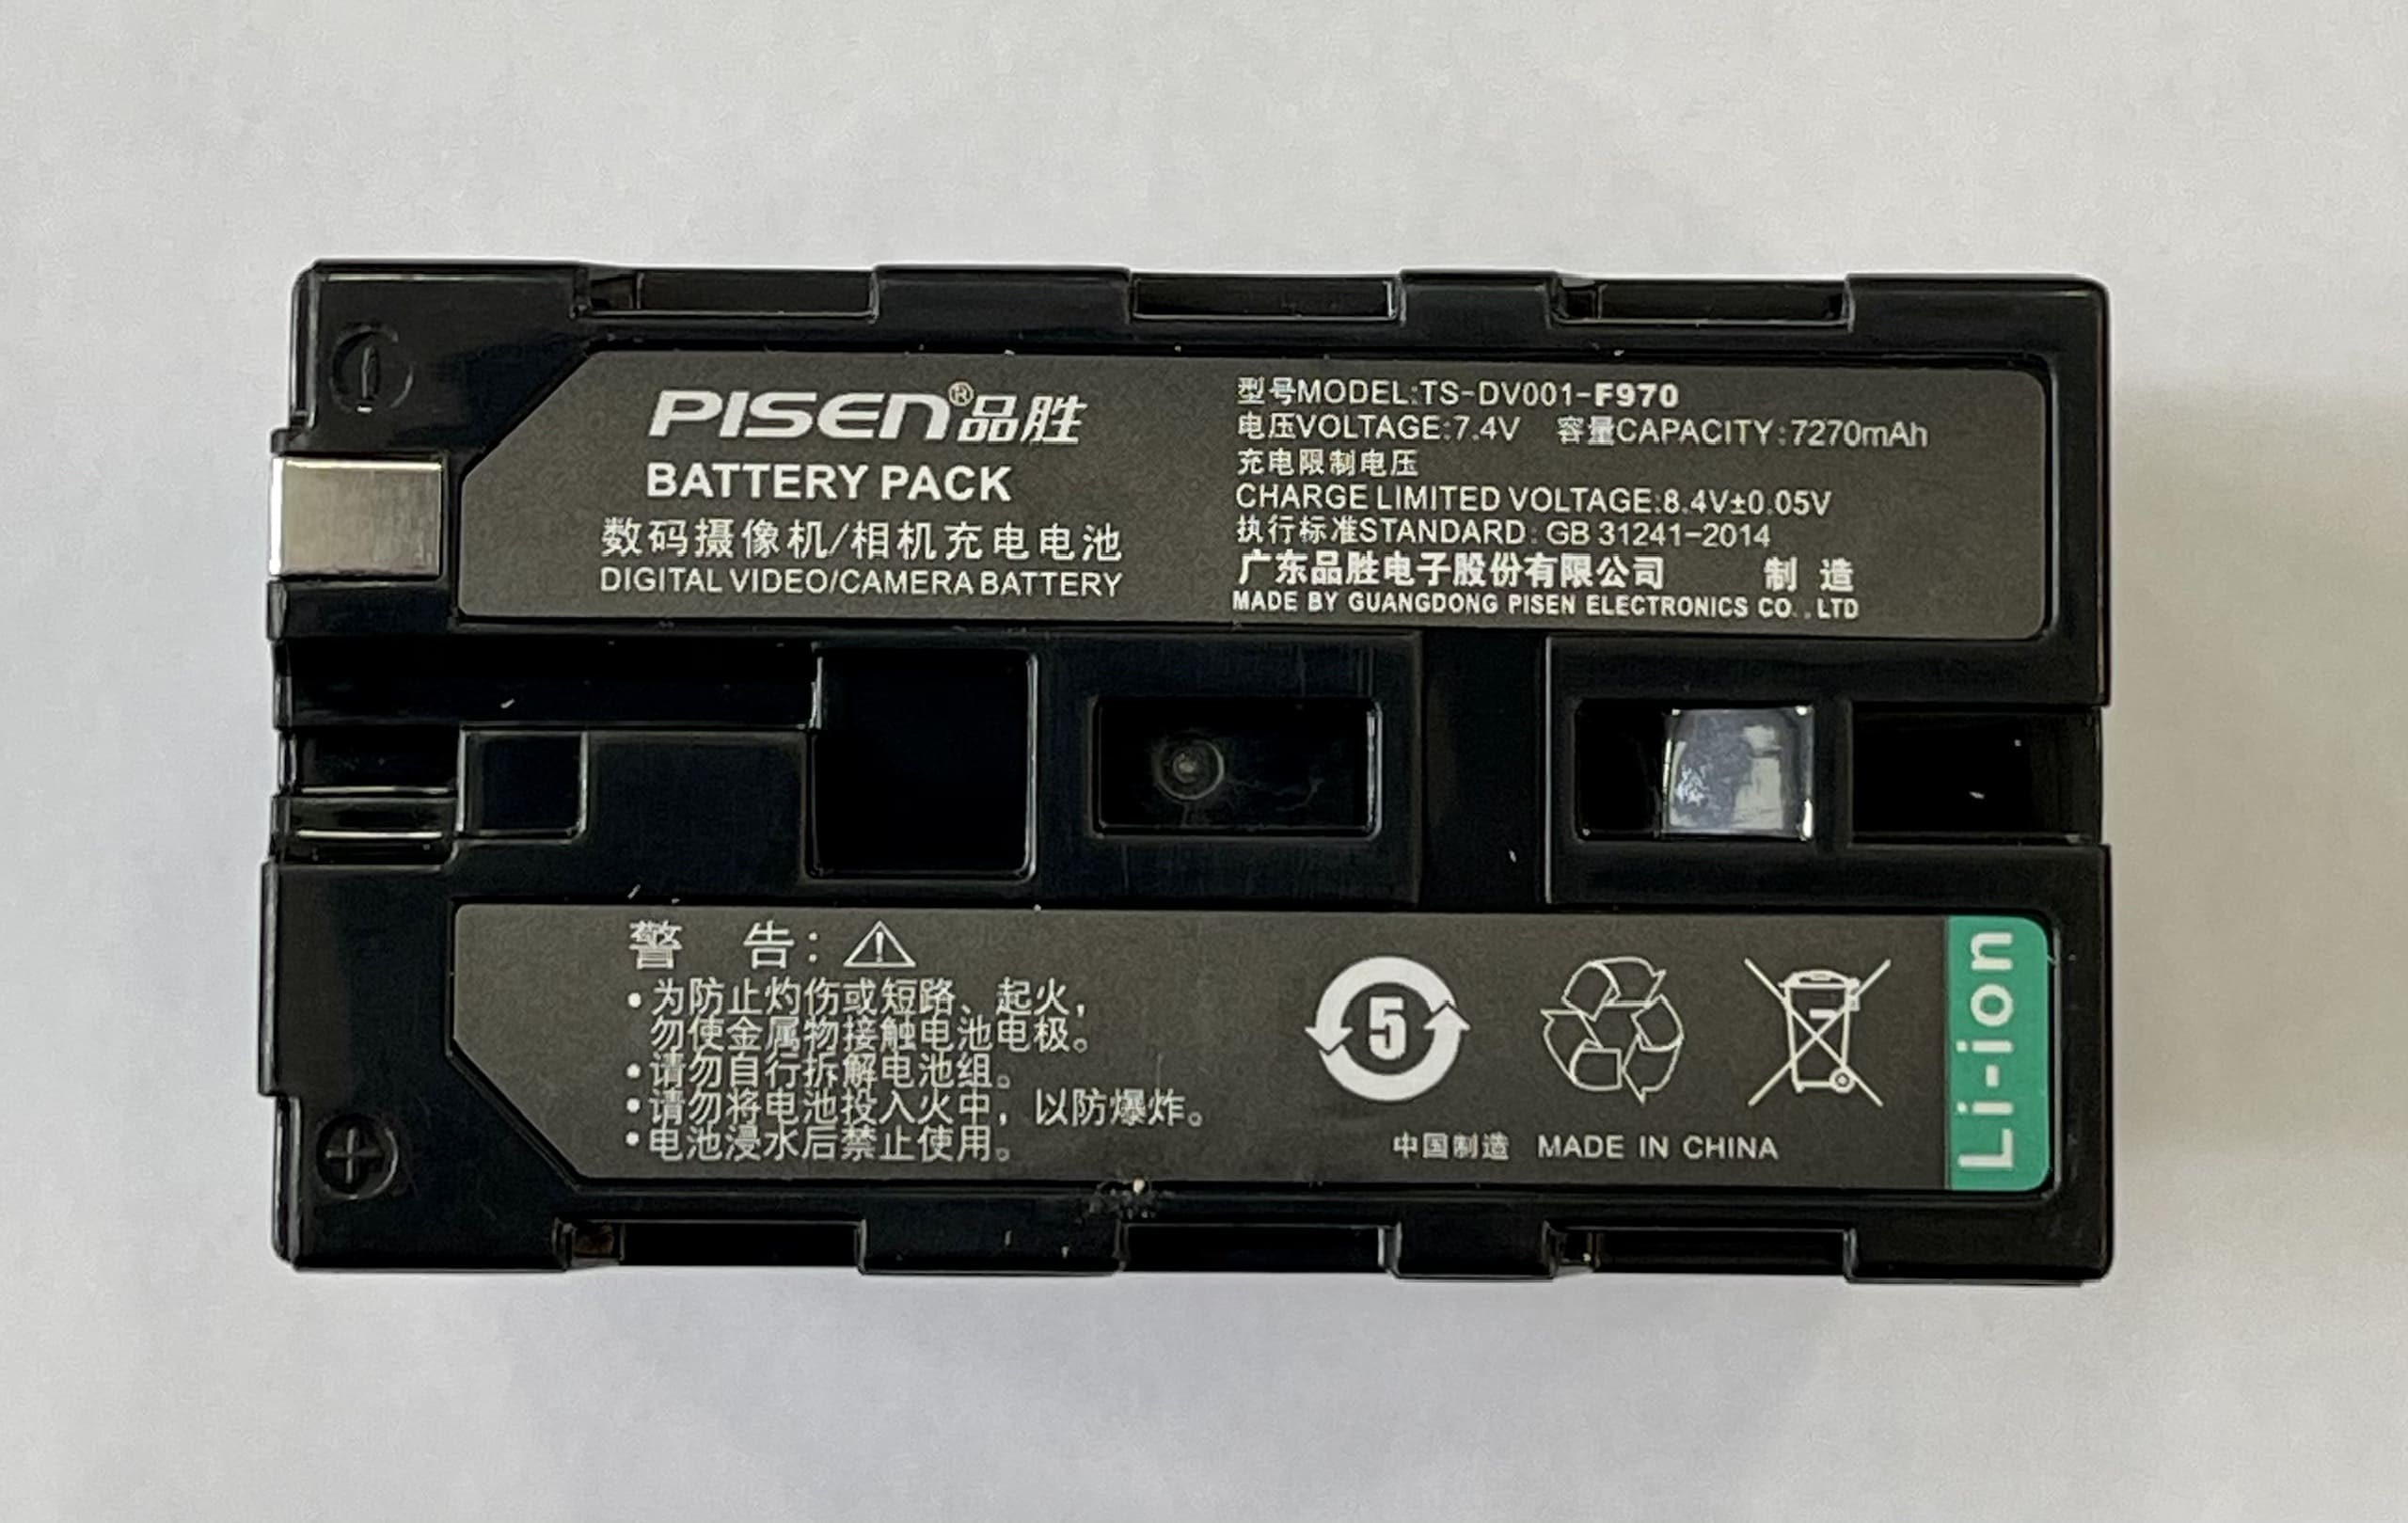 Pin Pisen Sony F970